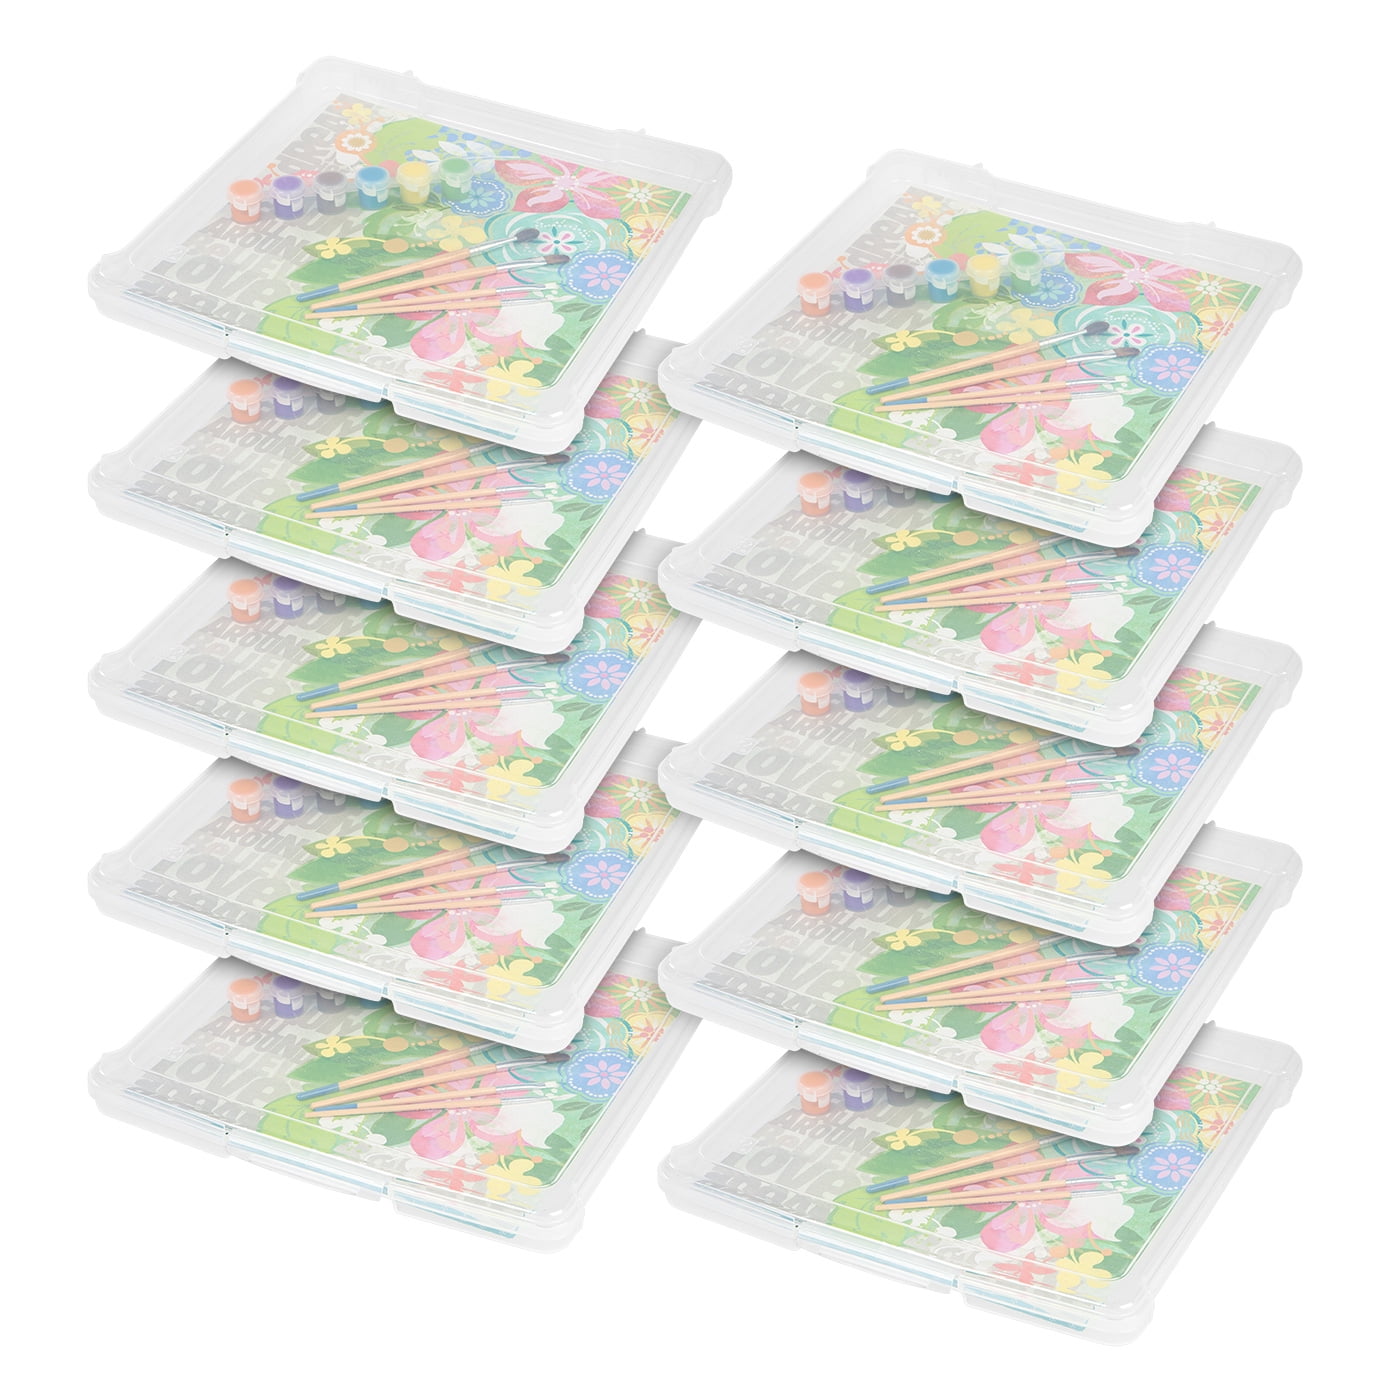  12” x 12” Plastic Scrapbook Storage Case by Simply